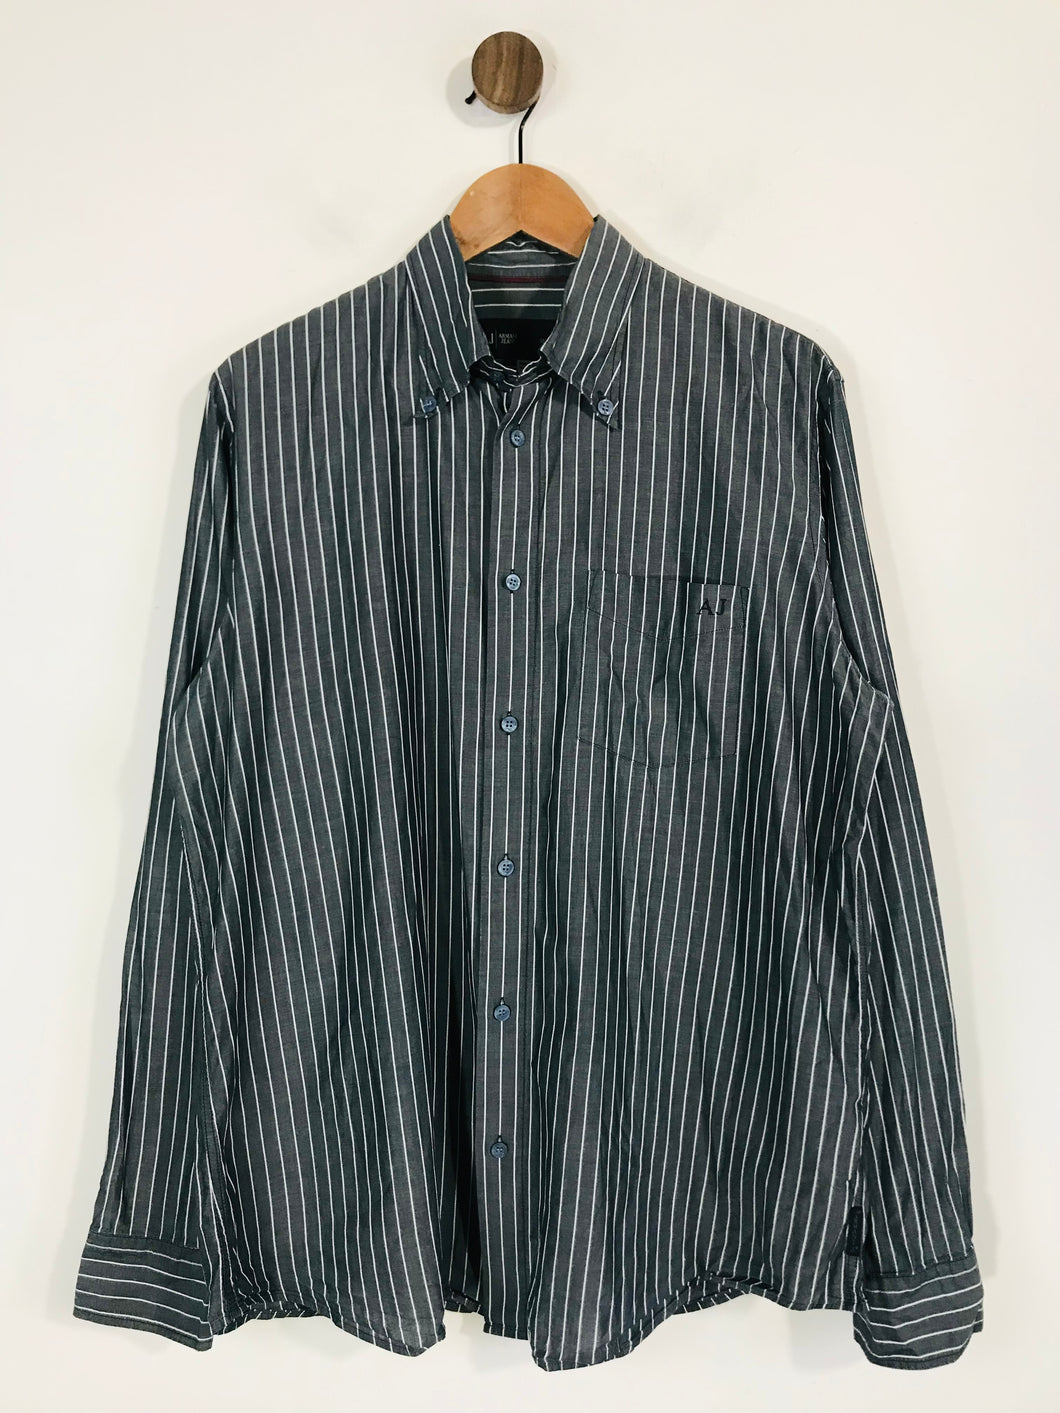 Armani Men's Cotton Striped Button-Up Shirt | L UK14 | Grey